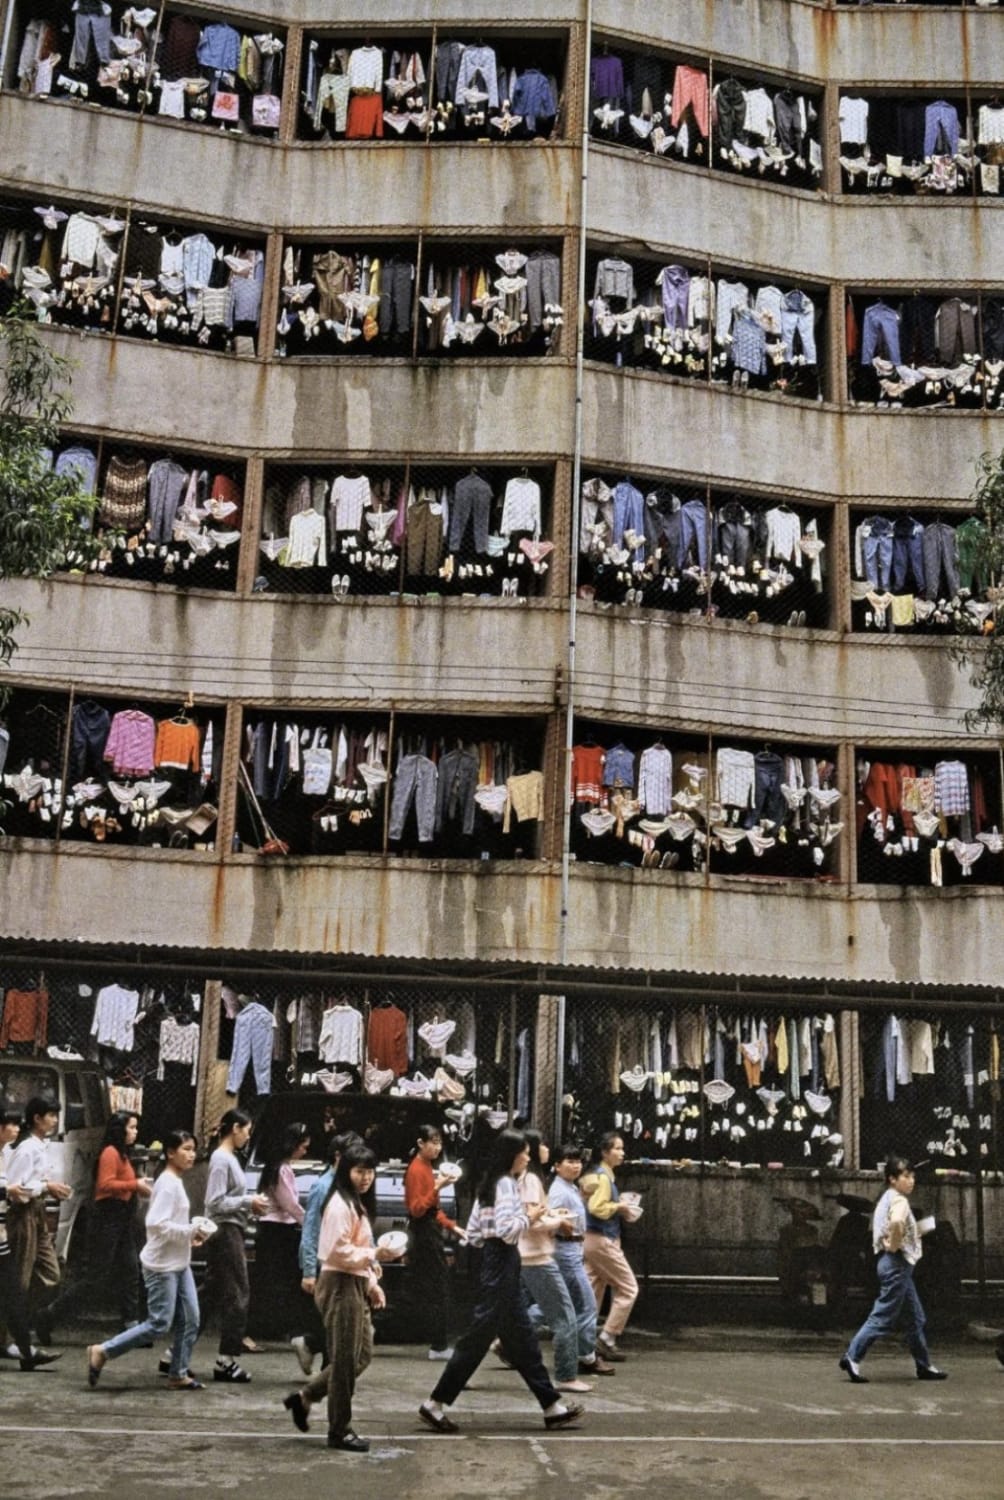 Female workers’ dormitory, 1986, Shenzhen